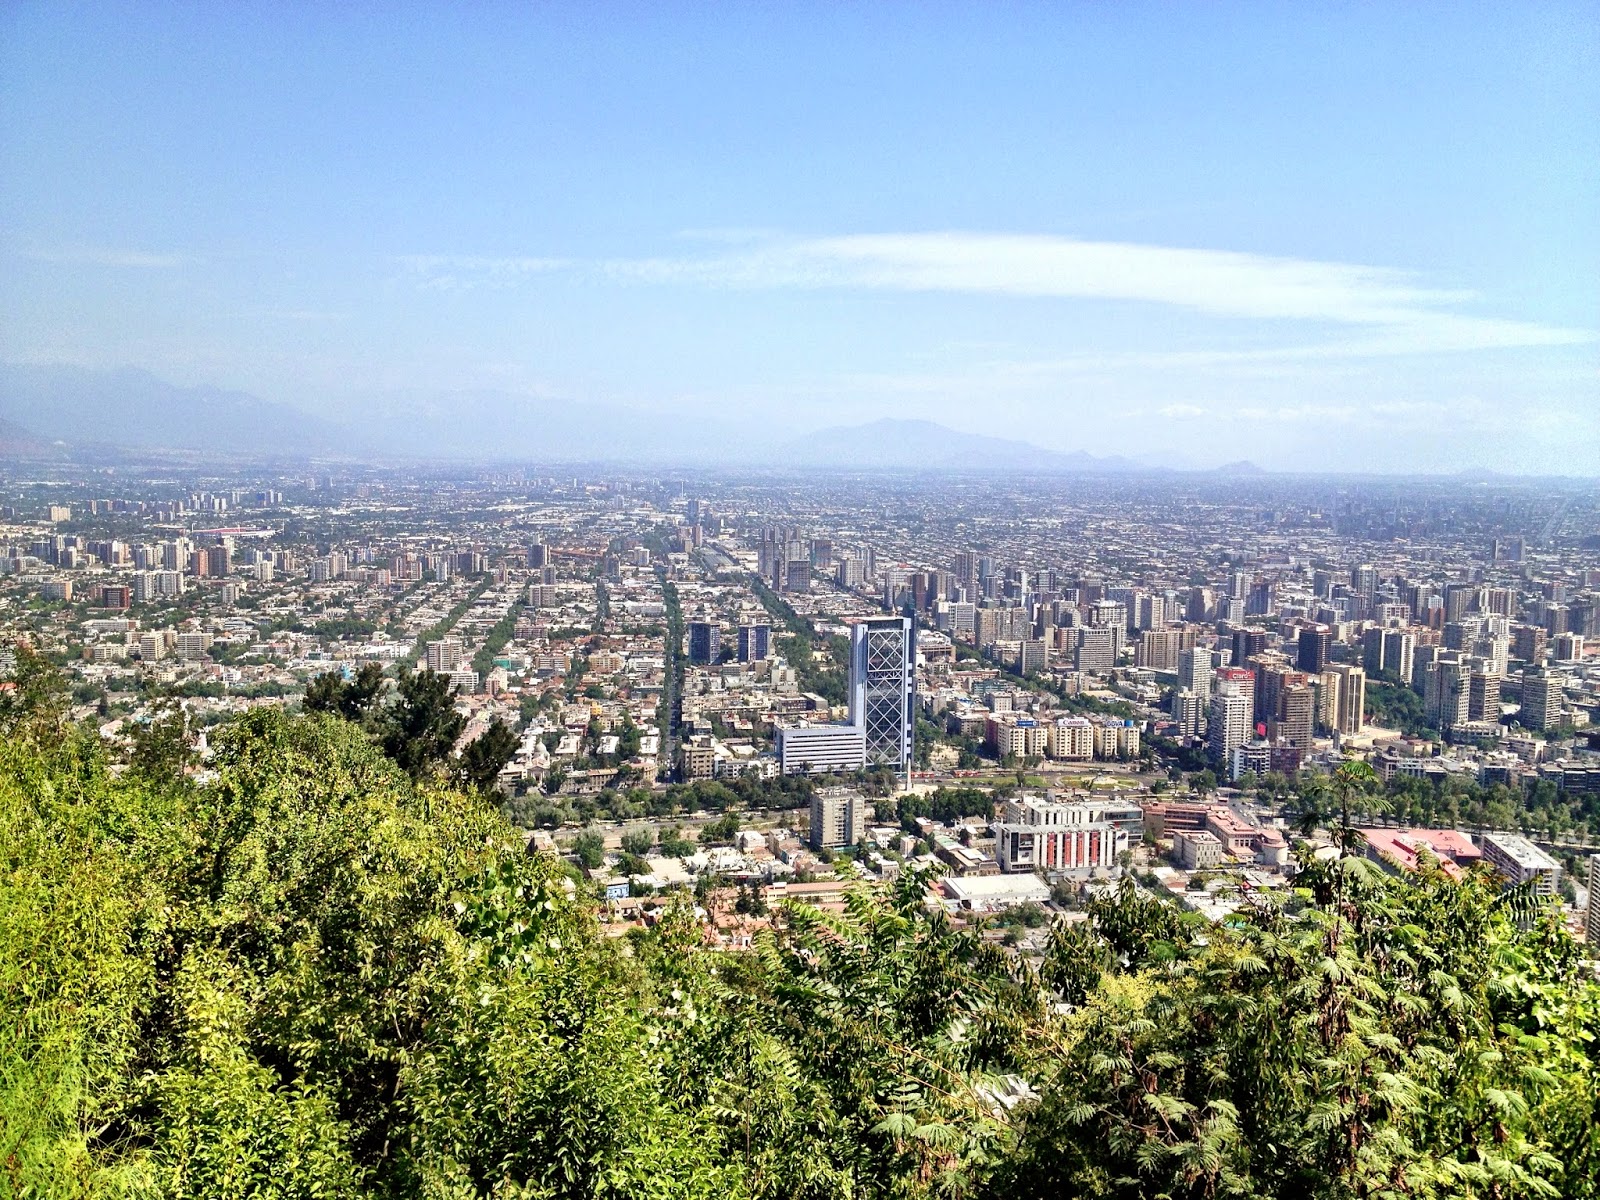 The view from Cerro San Cristobal, Santiago